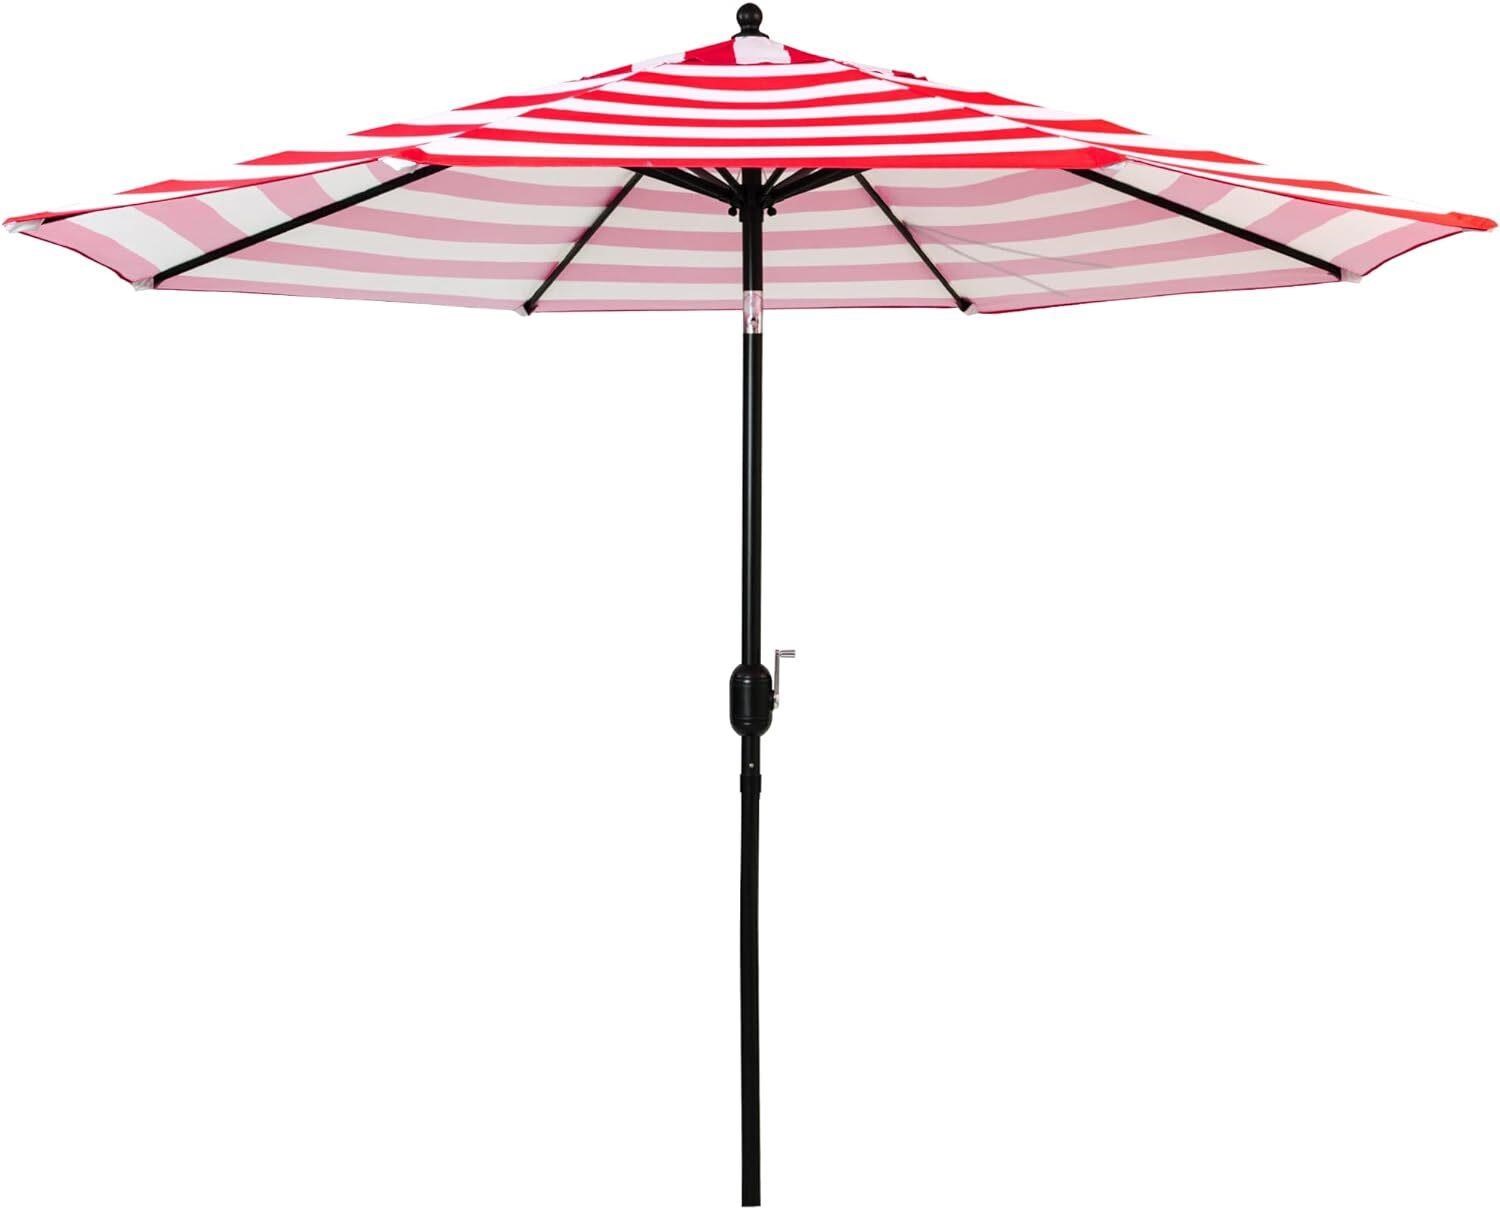 Sunnyglade 9' Patio Umbrella  8 Ribs (Red)